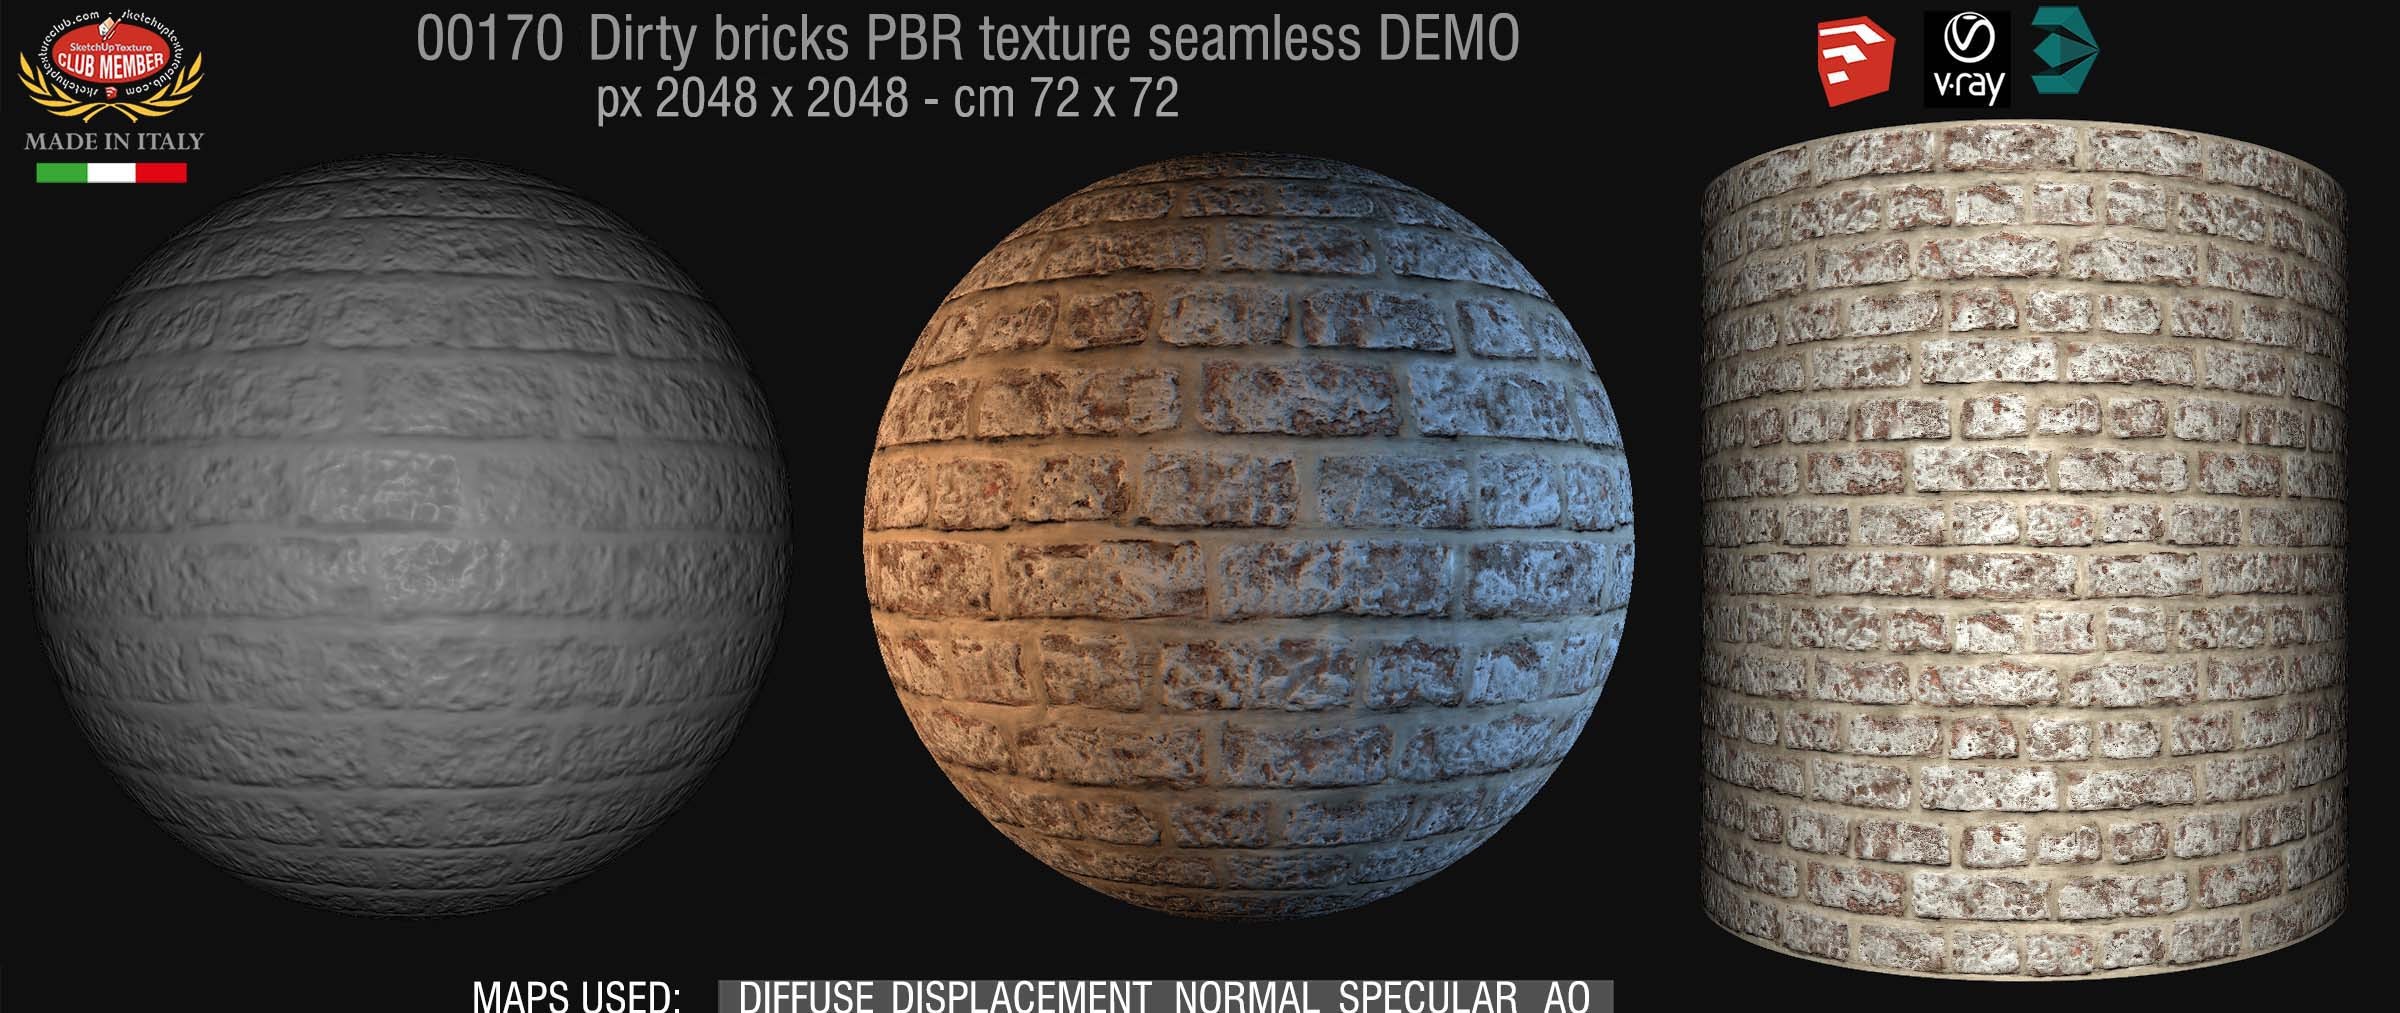 00170 Dirty bricks PBR texture seamless DEMO